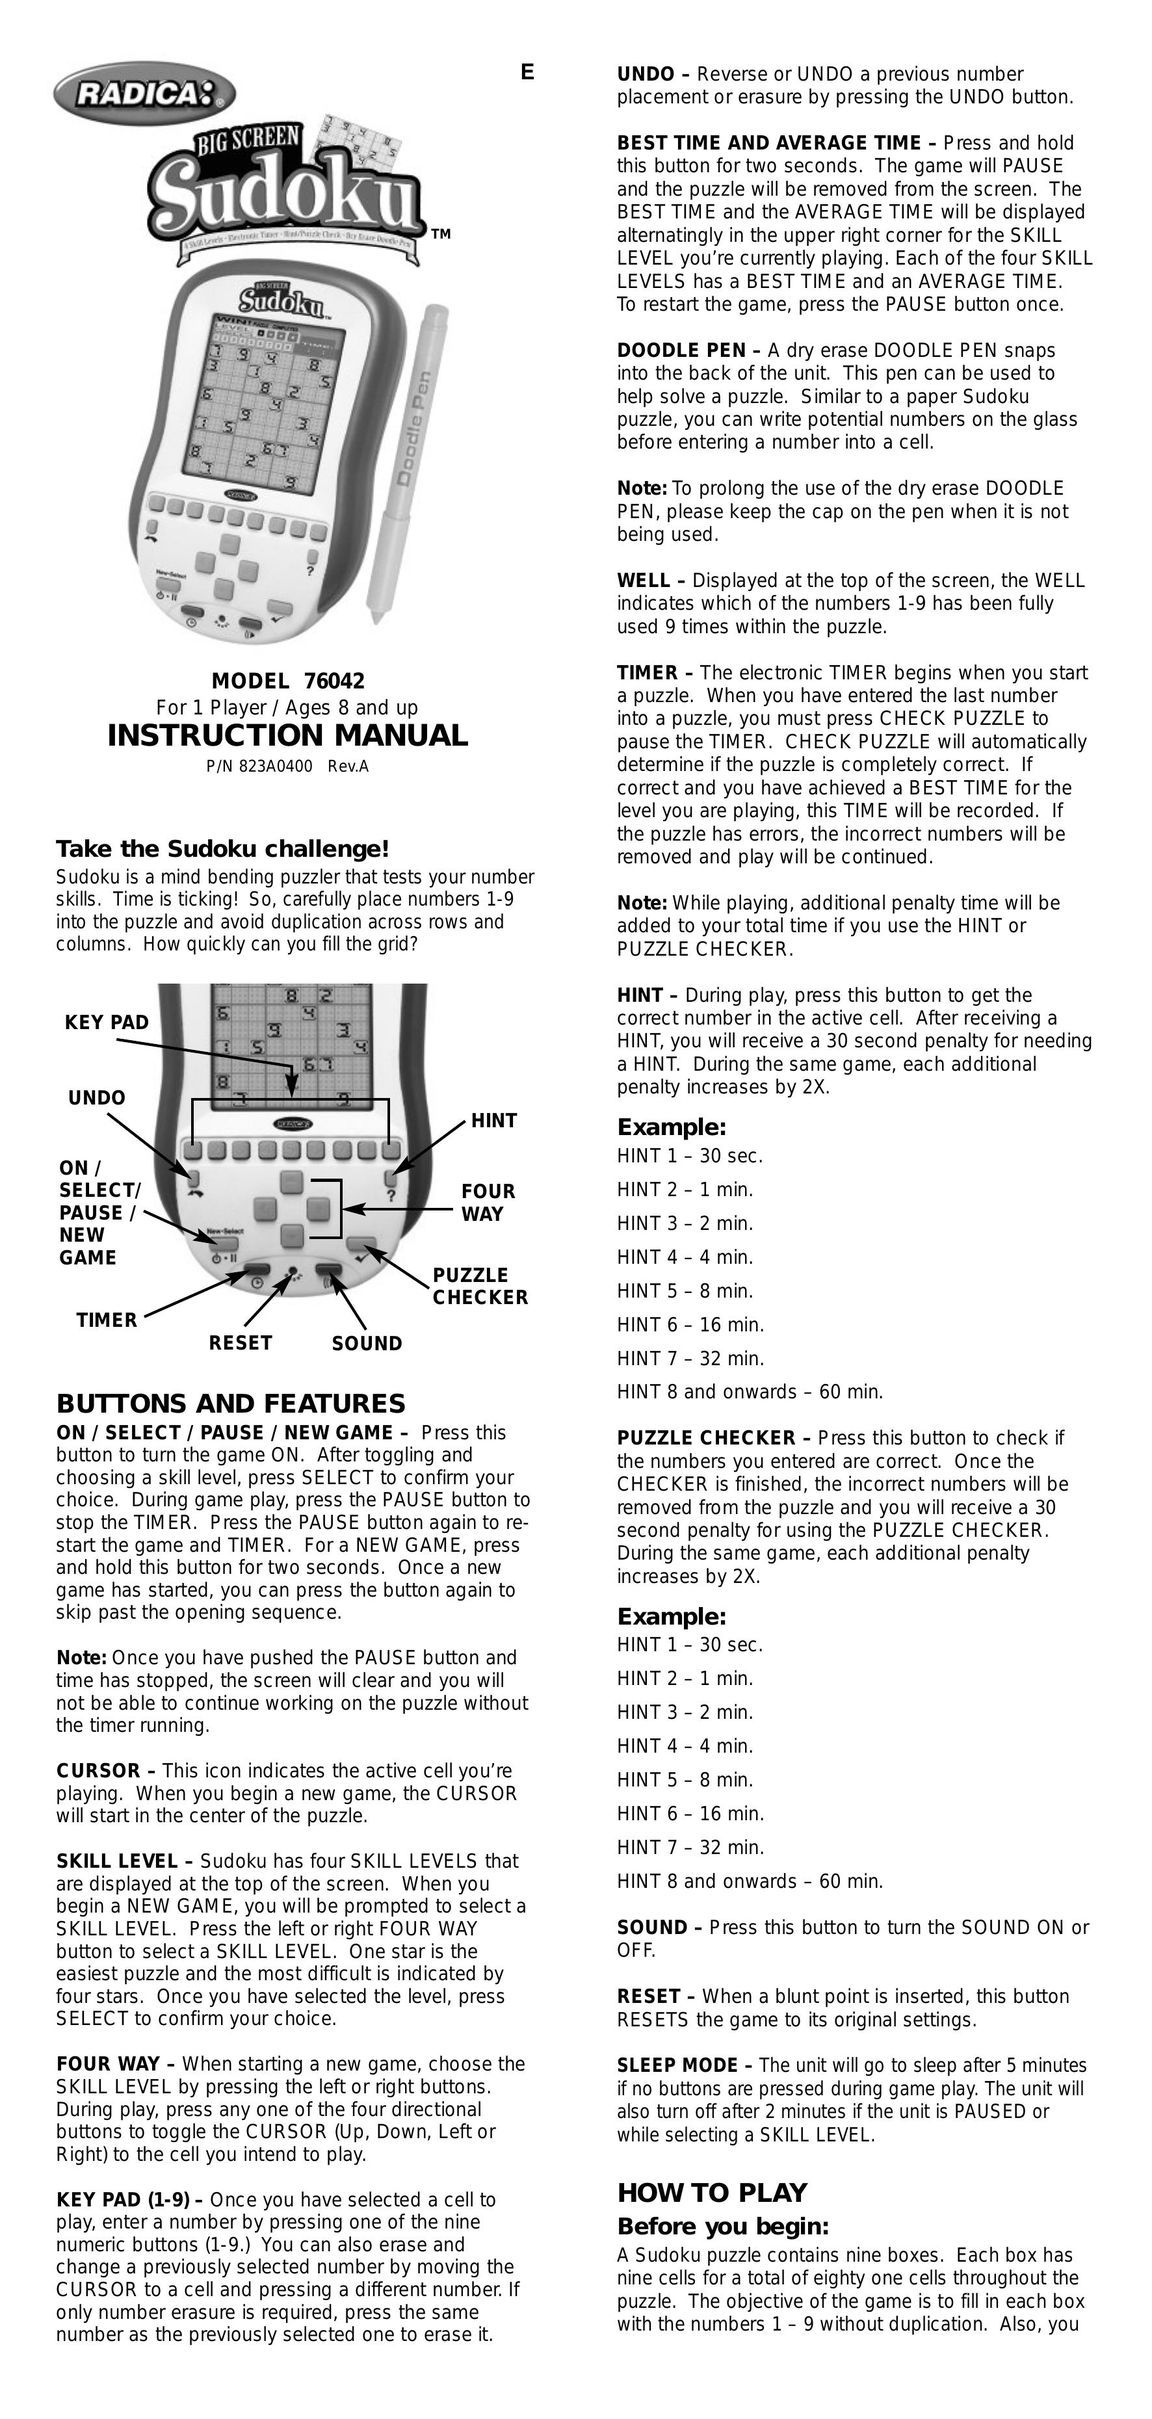 Radica Games 76042 Handheld Game System User Manual